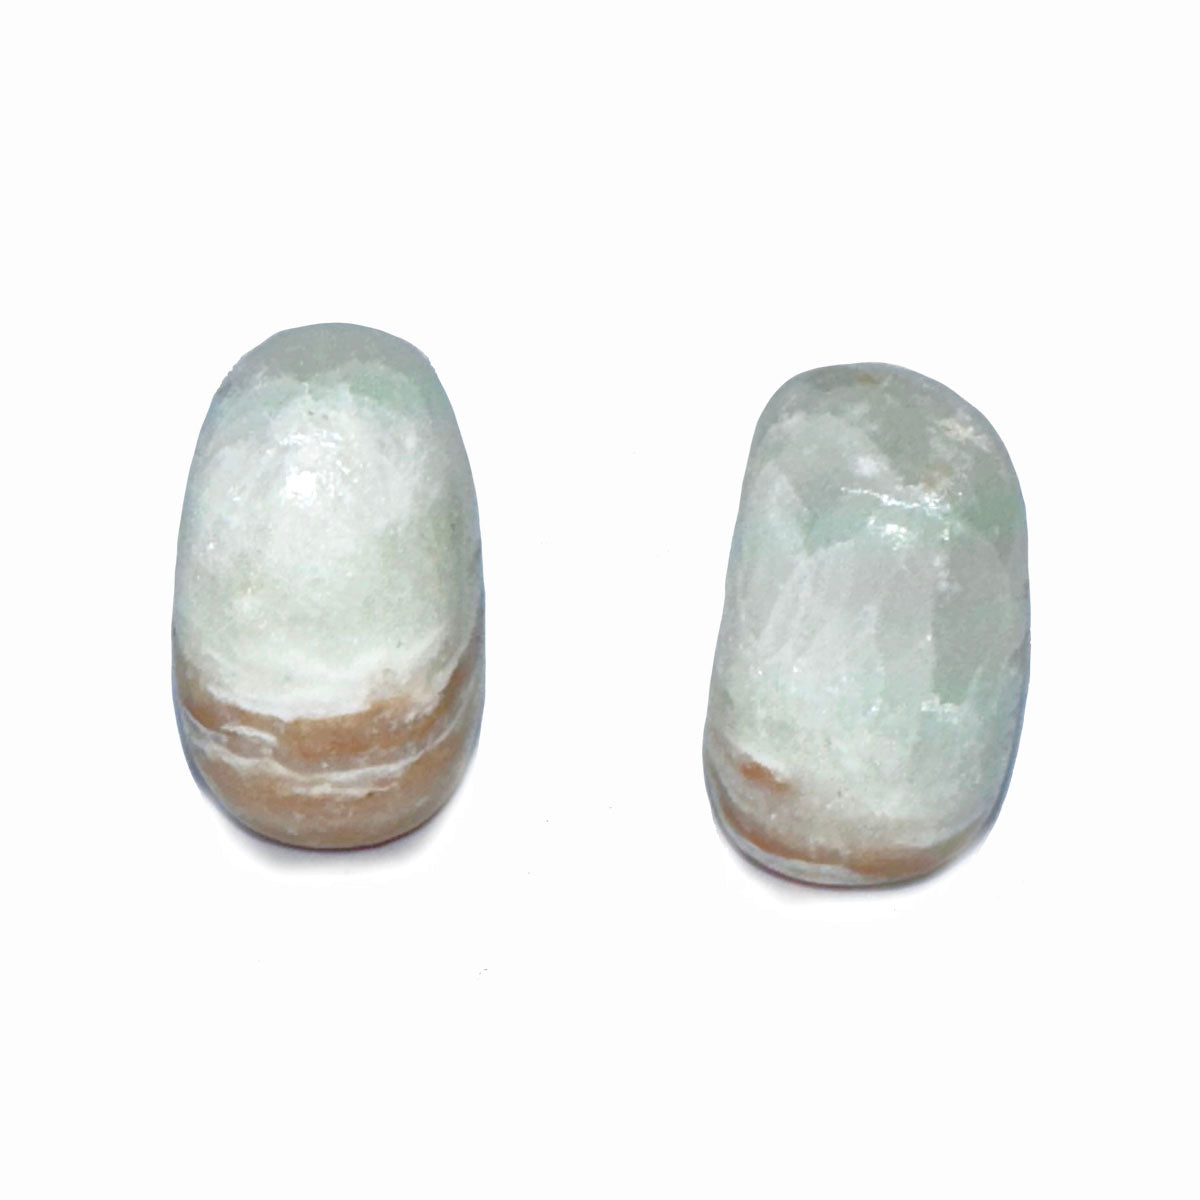 Caribbean Calcite - Stone - Healing Properties